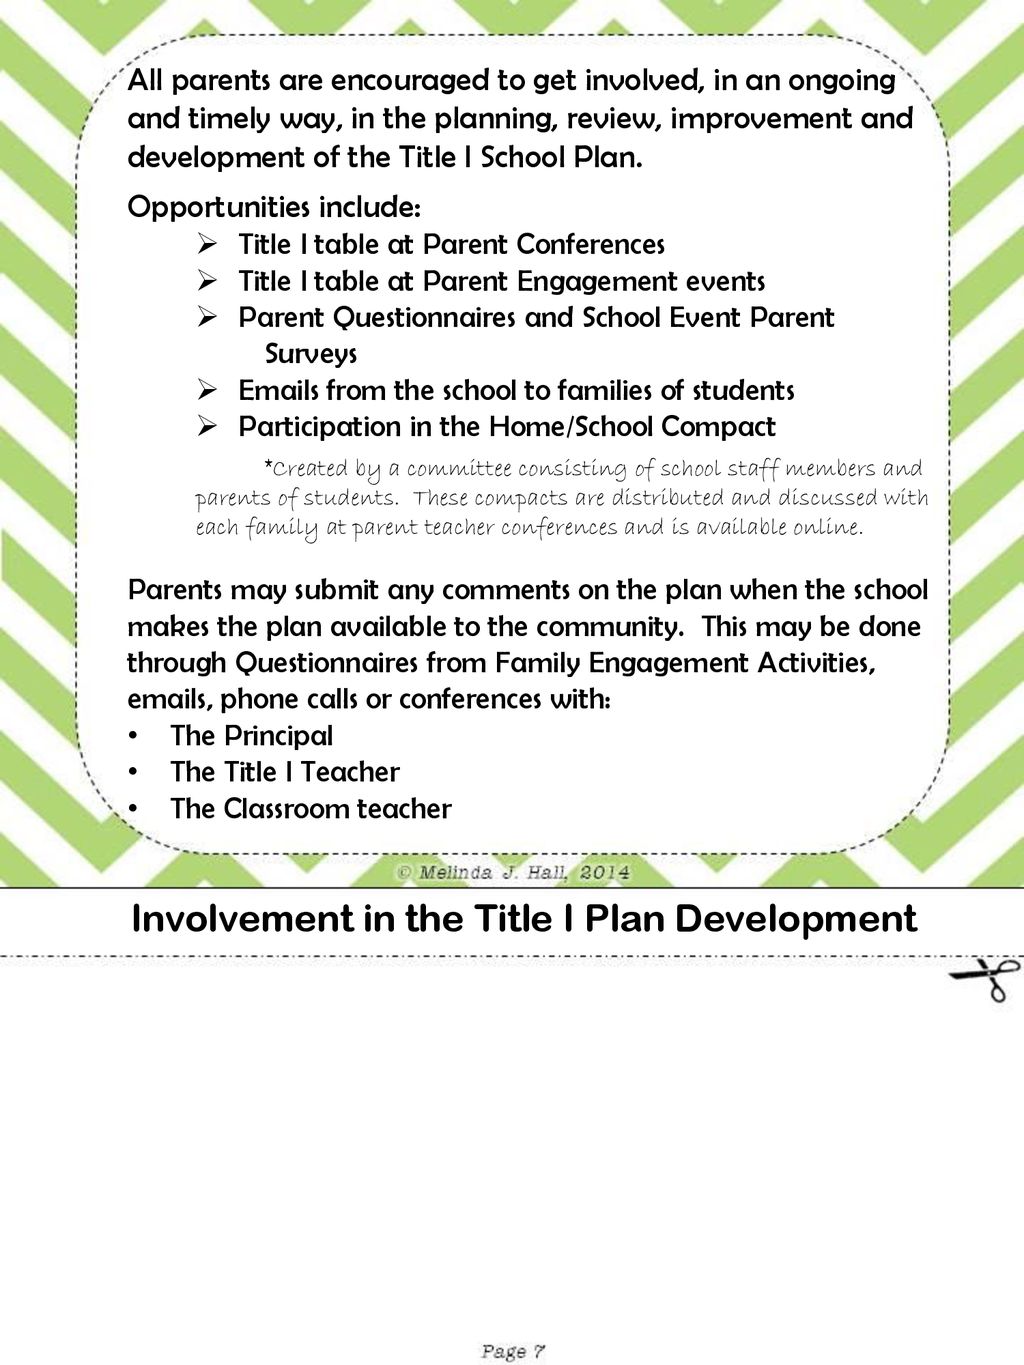 Involvement in the Title I Plan Development